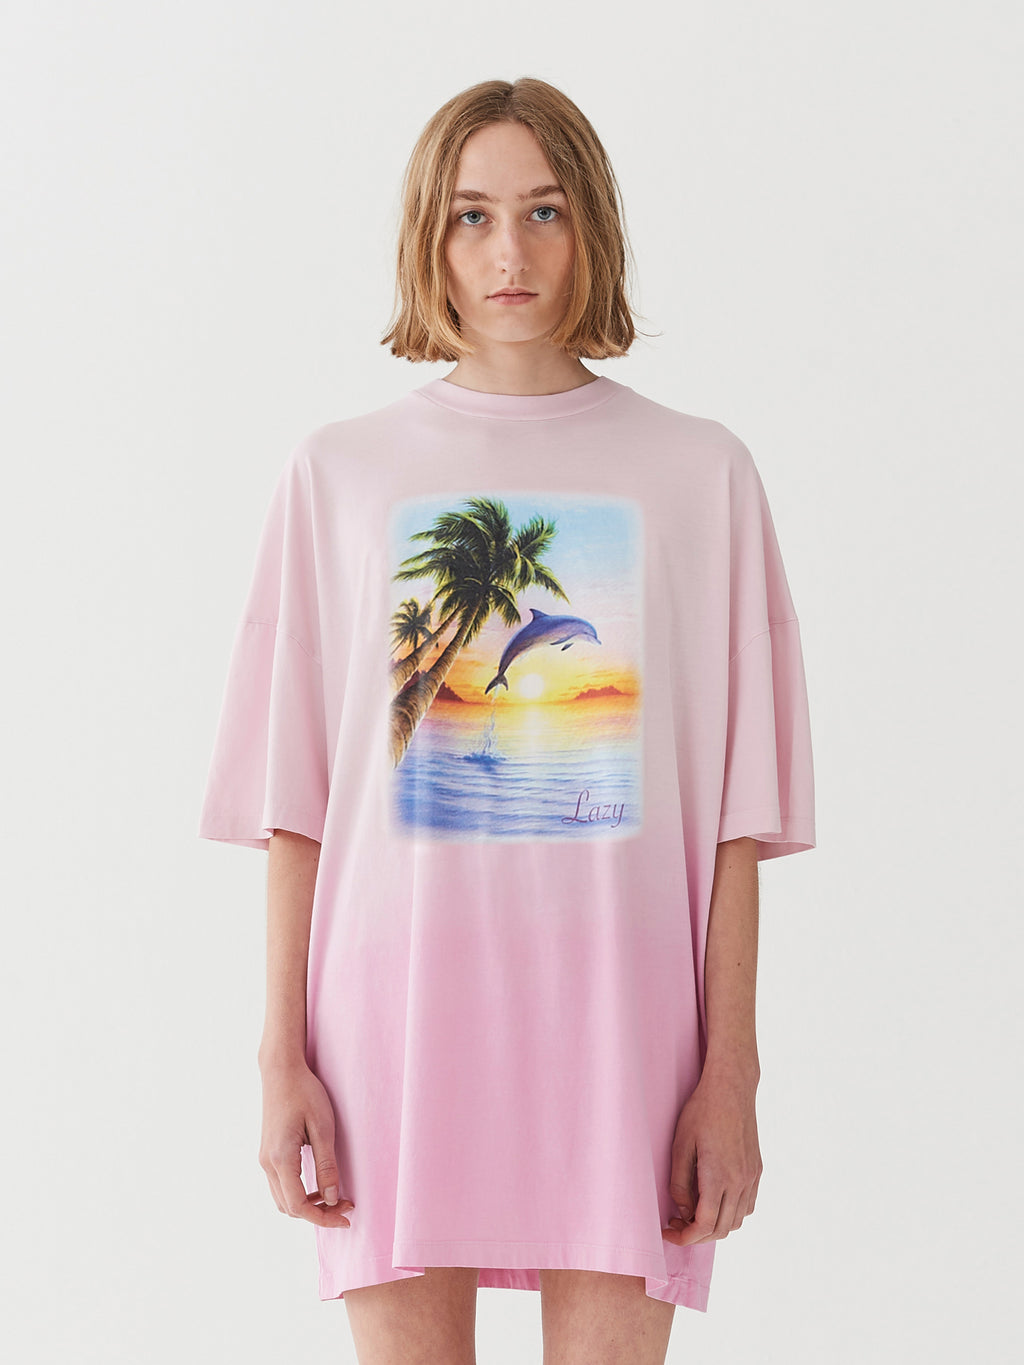 tshirt beach dress